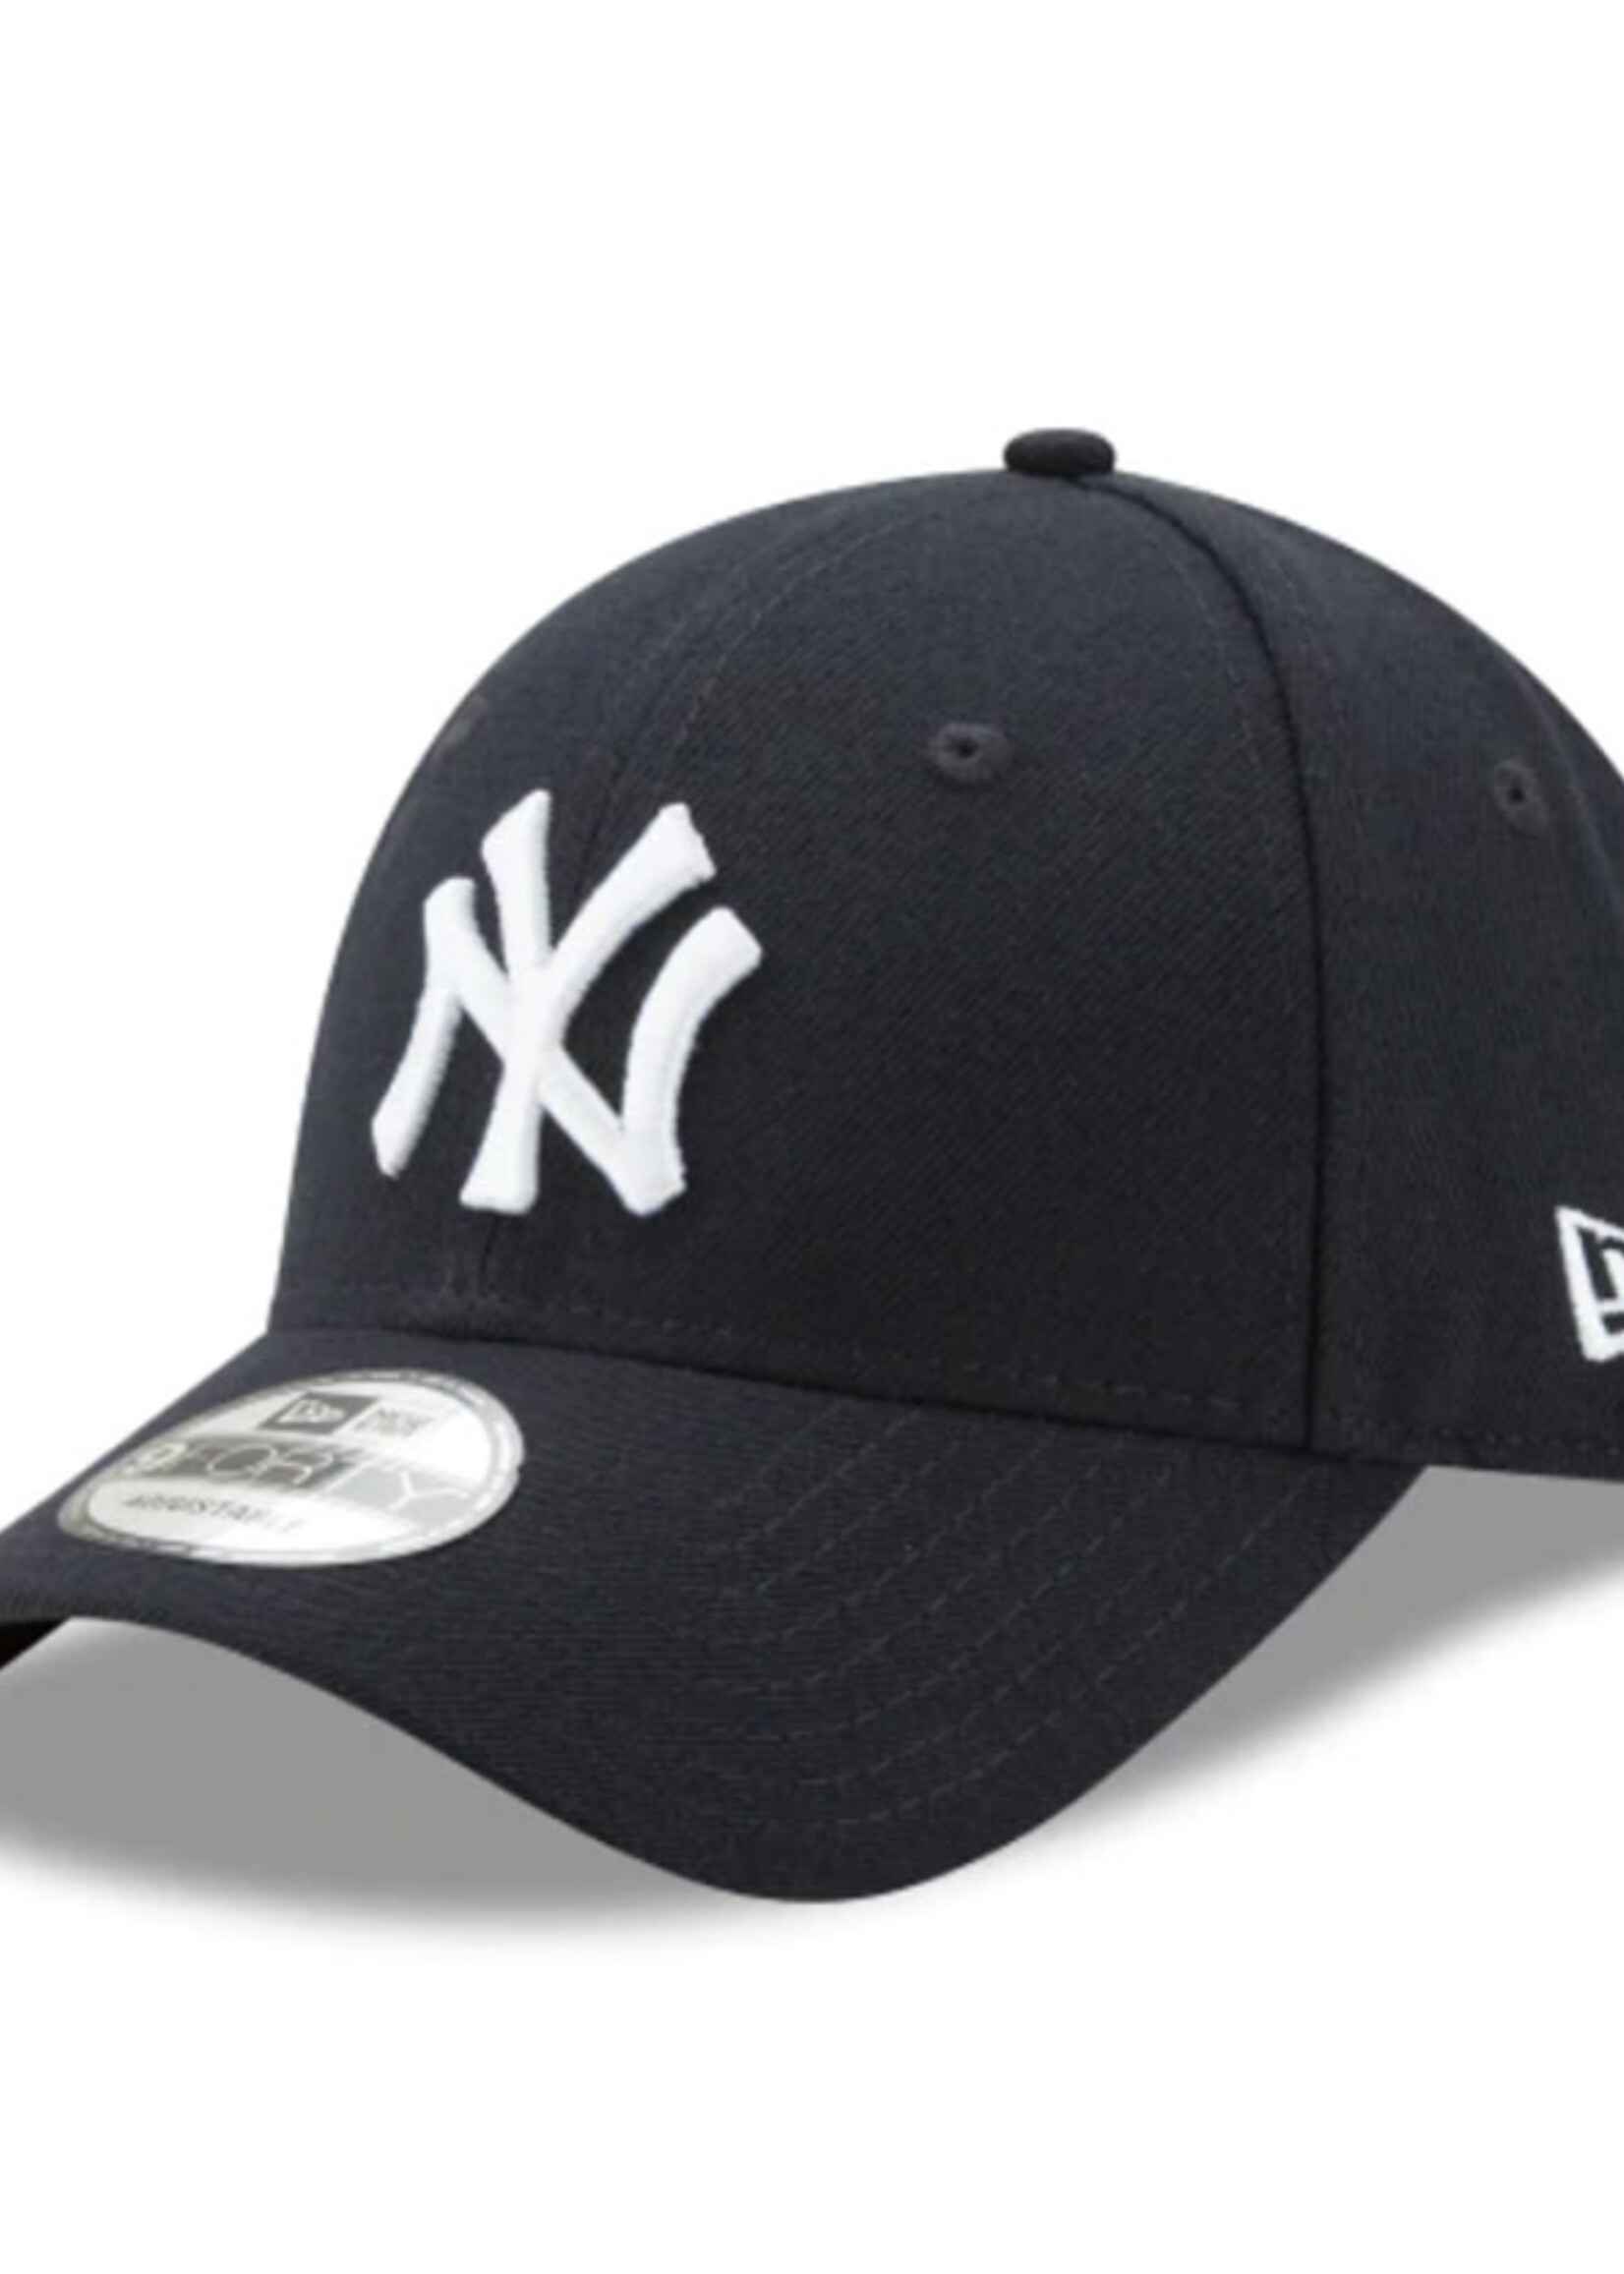 New Era New Era New York Yankees MLB 9Forty Cap Schwarz Weiss